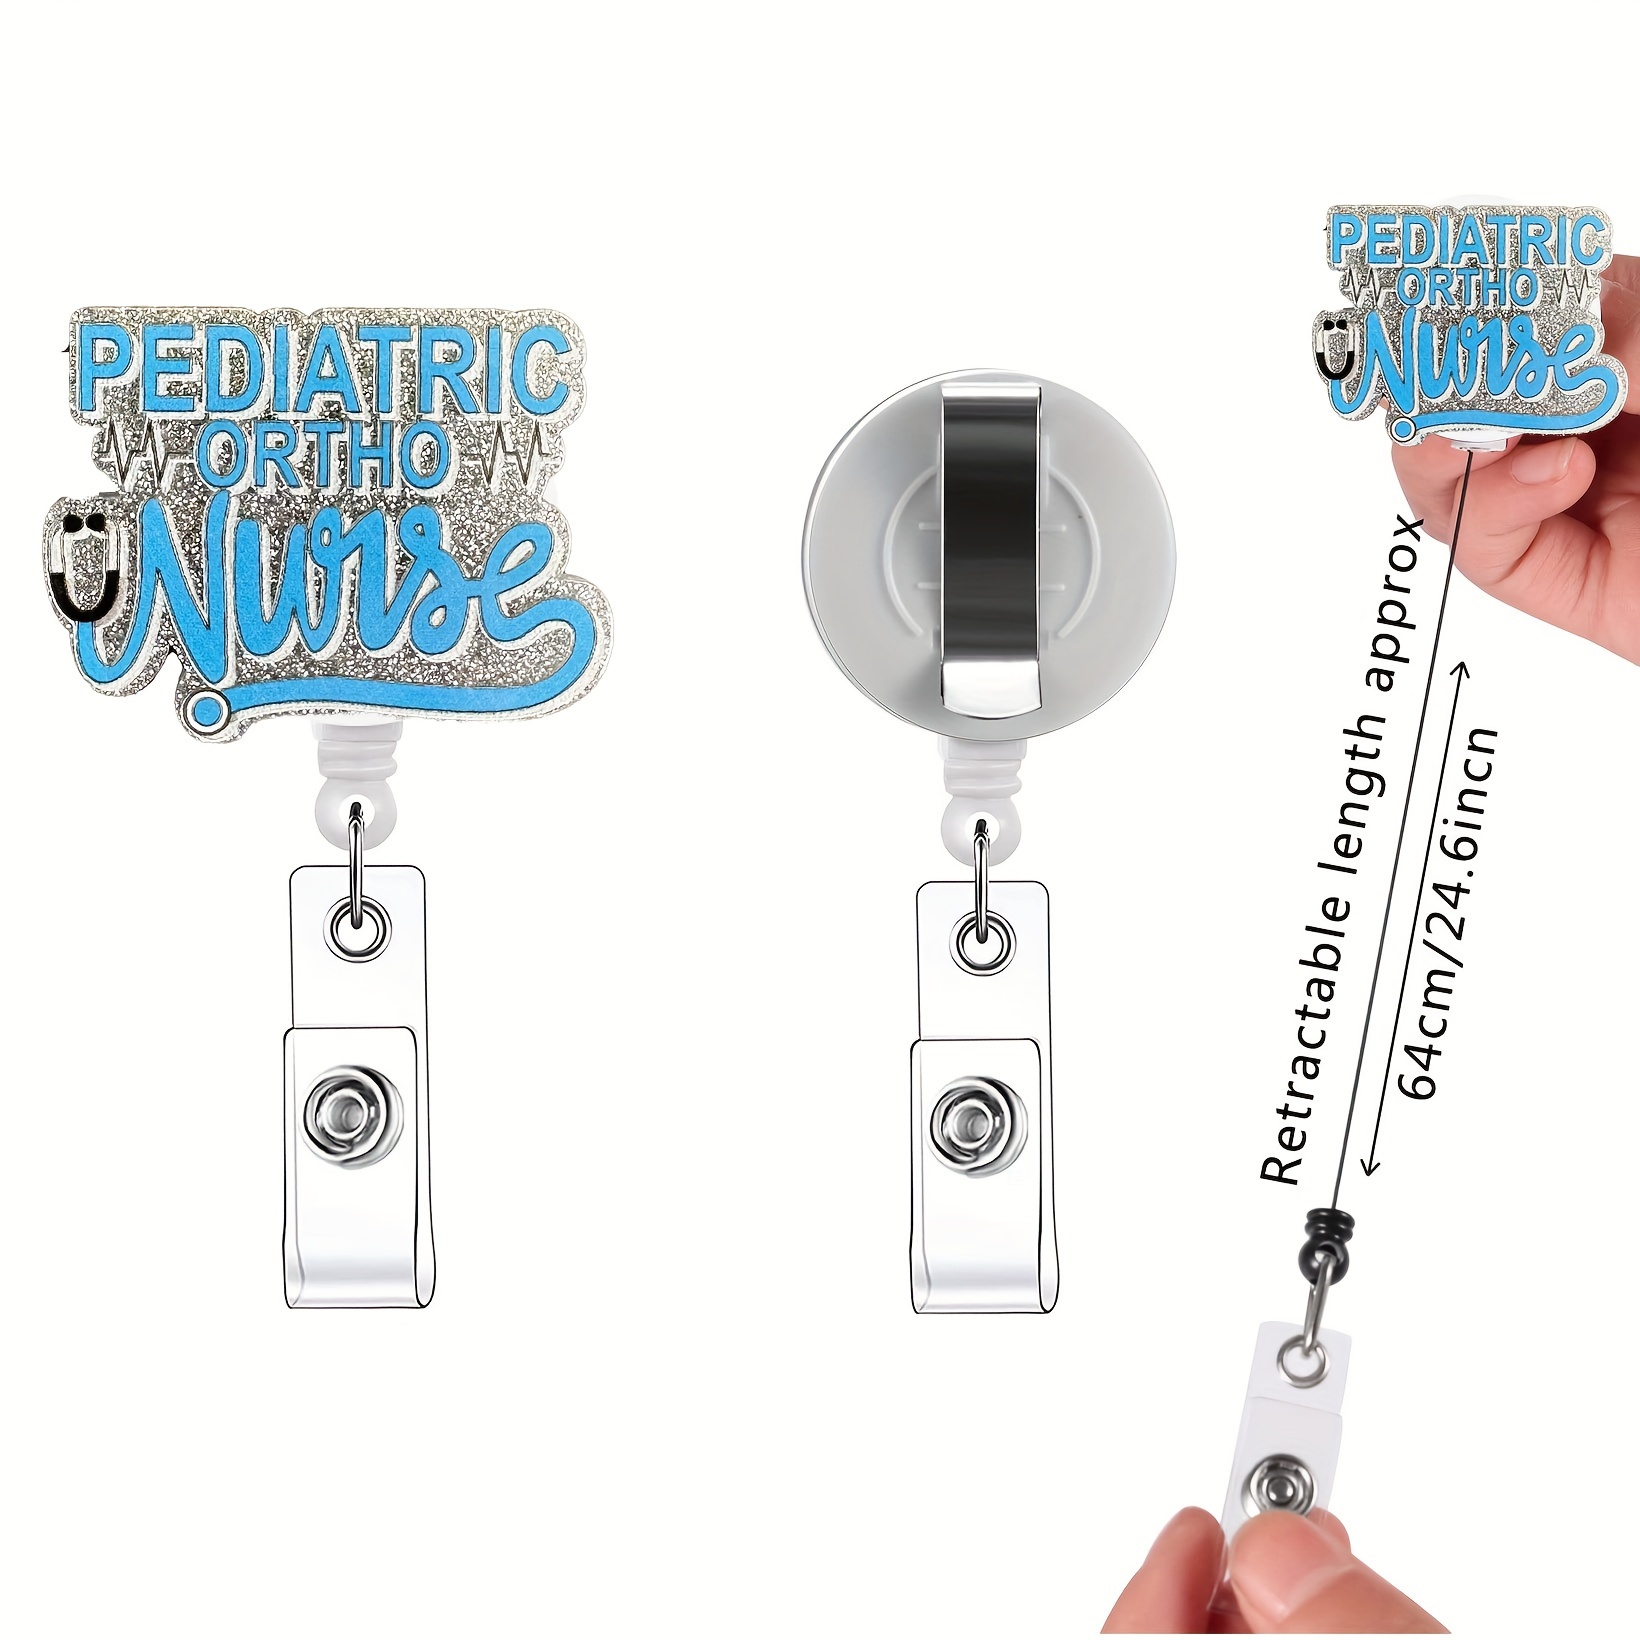 Pediatric Nurse Badge Reel Pediatric Nurse Badge Holder Pediatric